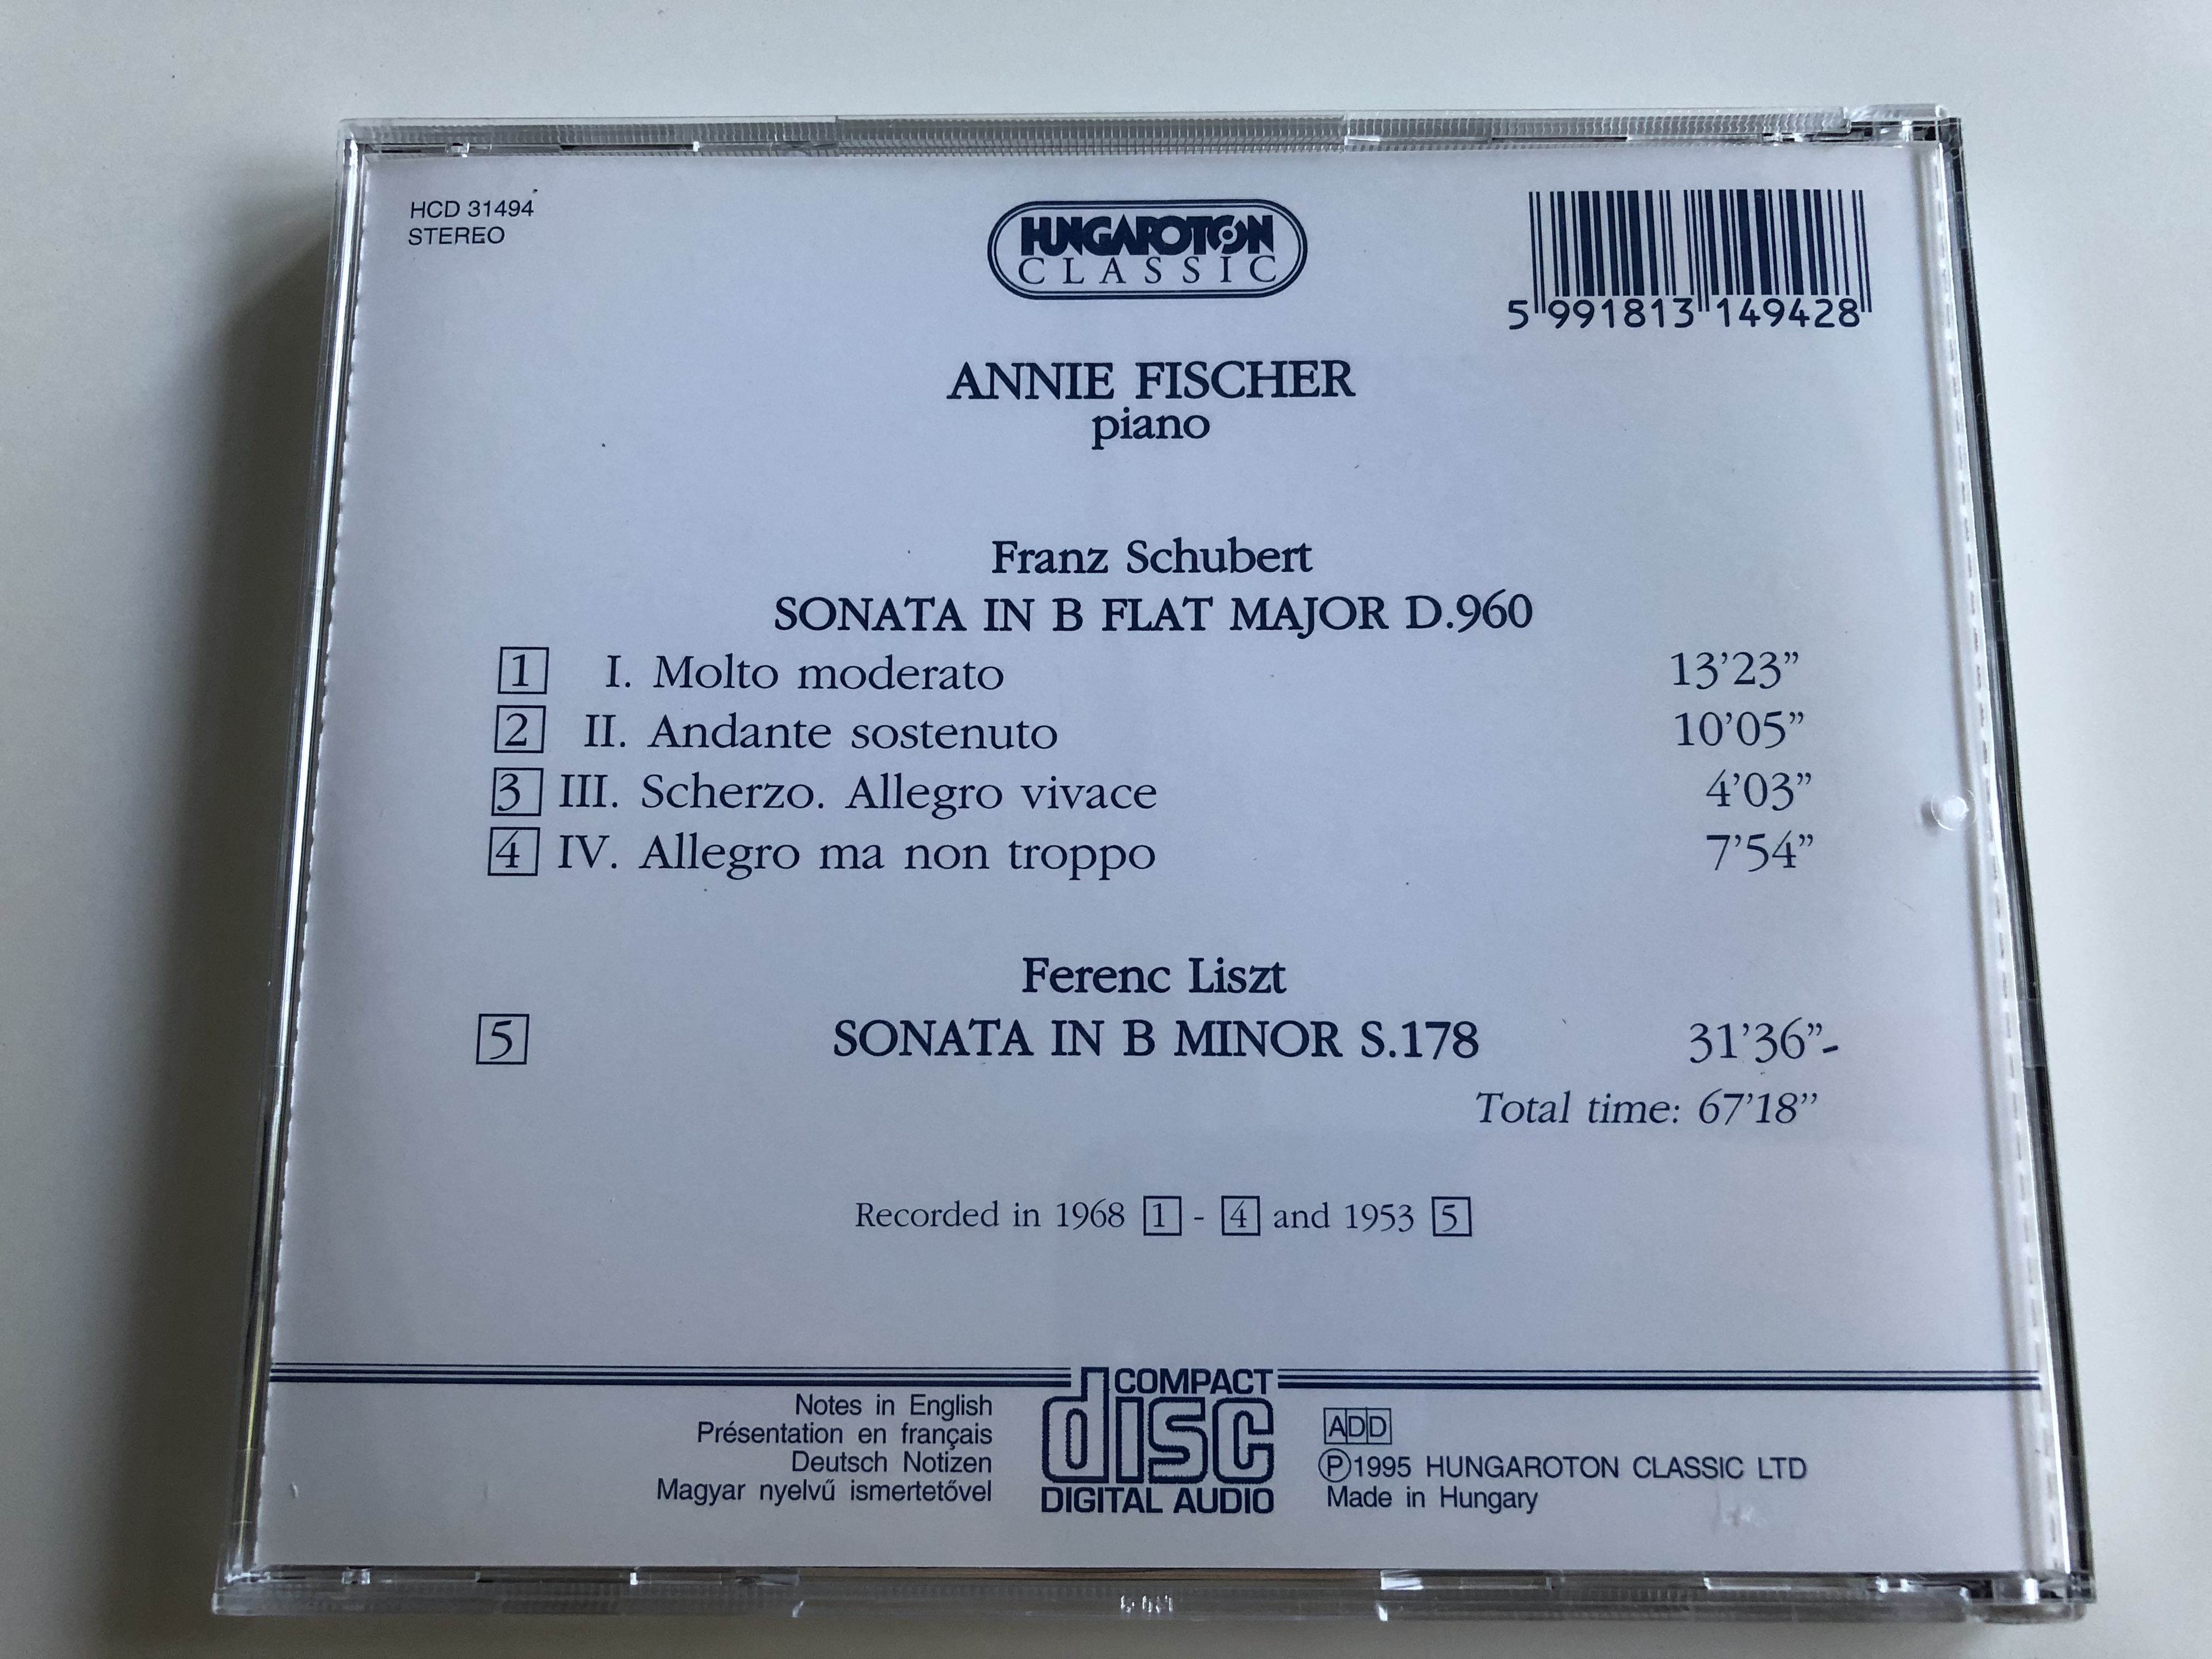 schubert-sonata-in-b-flat-major-d.960-liszt-sonata-in-b-minor-annie-fischer-piano-hungaroton-classic-audio-cd-1995-hcd-31494-7-.jpg